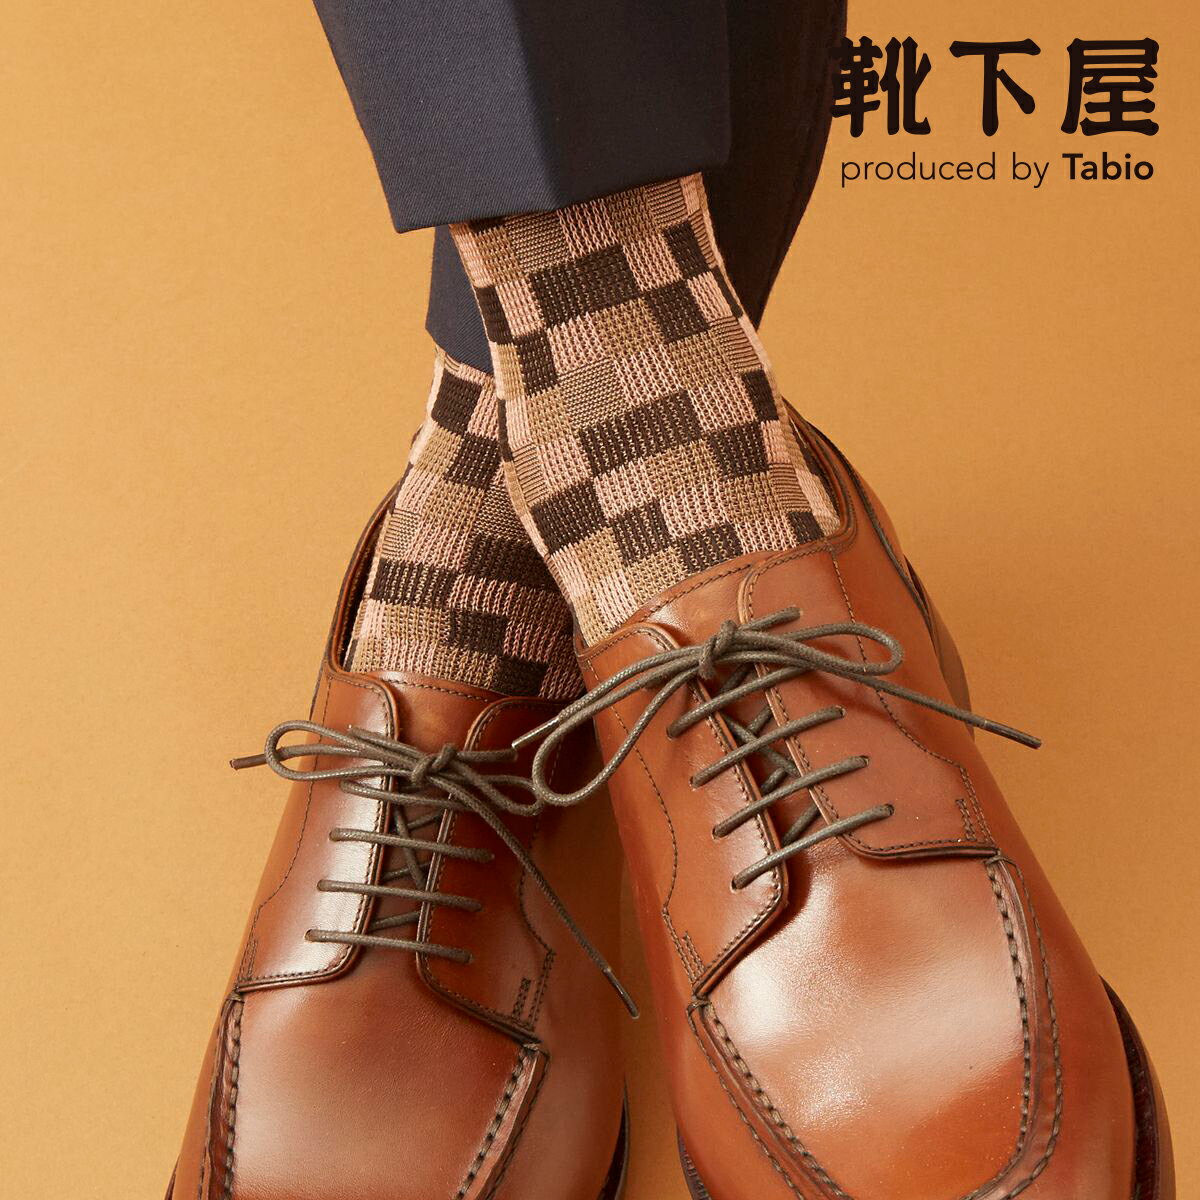 【Tabio MEN】 メンズ リンクス ブロックソックス / 靴下屋 靴下 タビオ くつ下 クルー メンズ 日本製